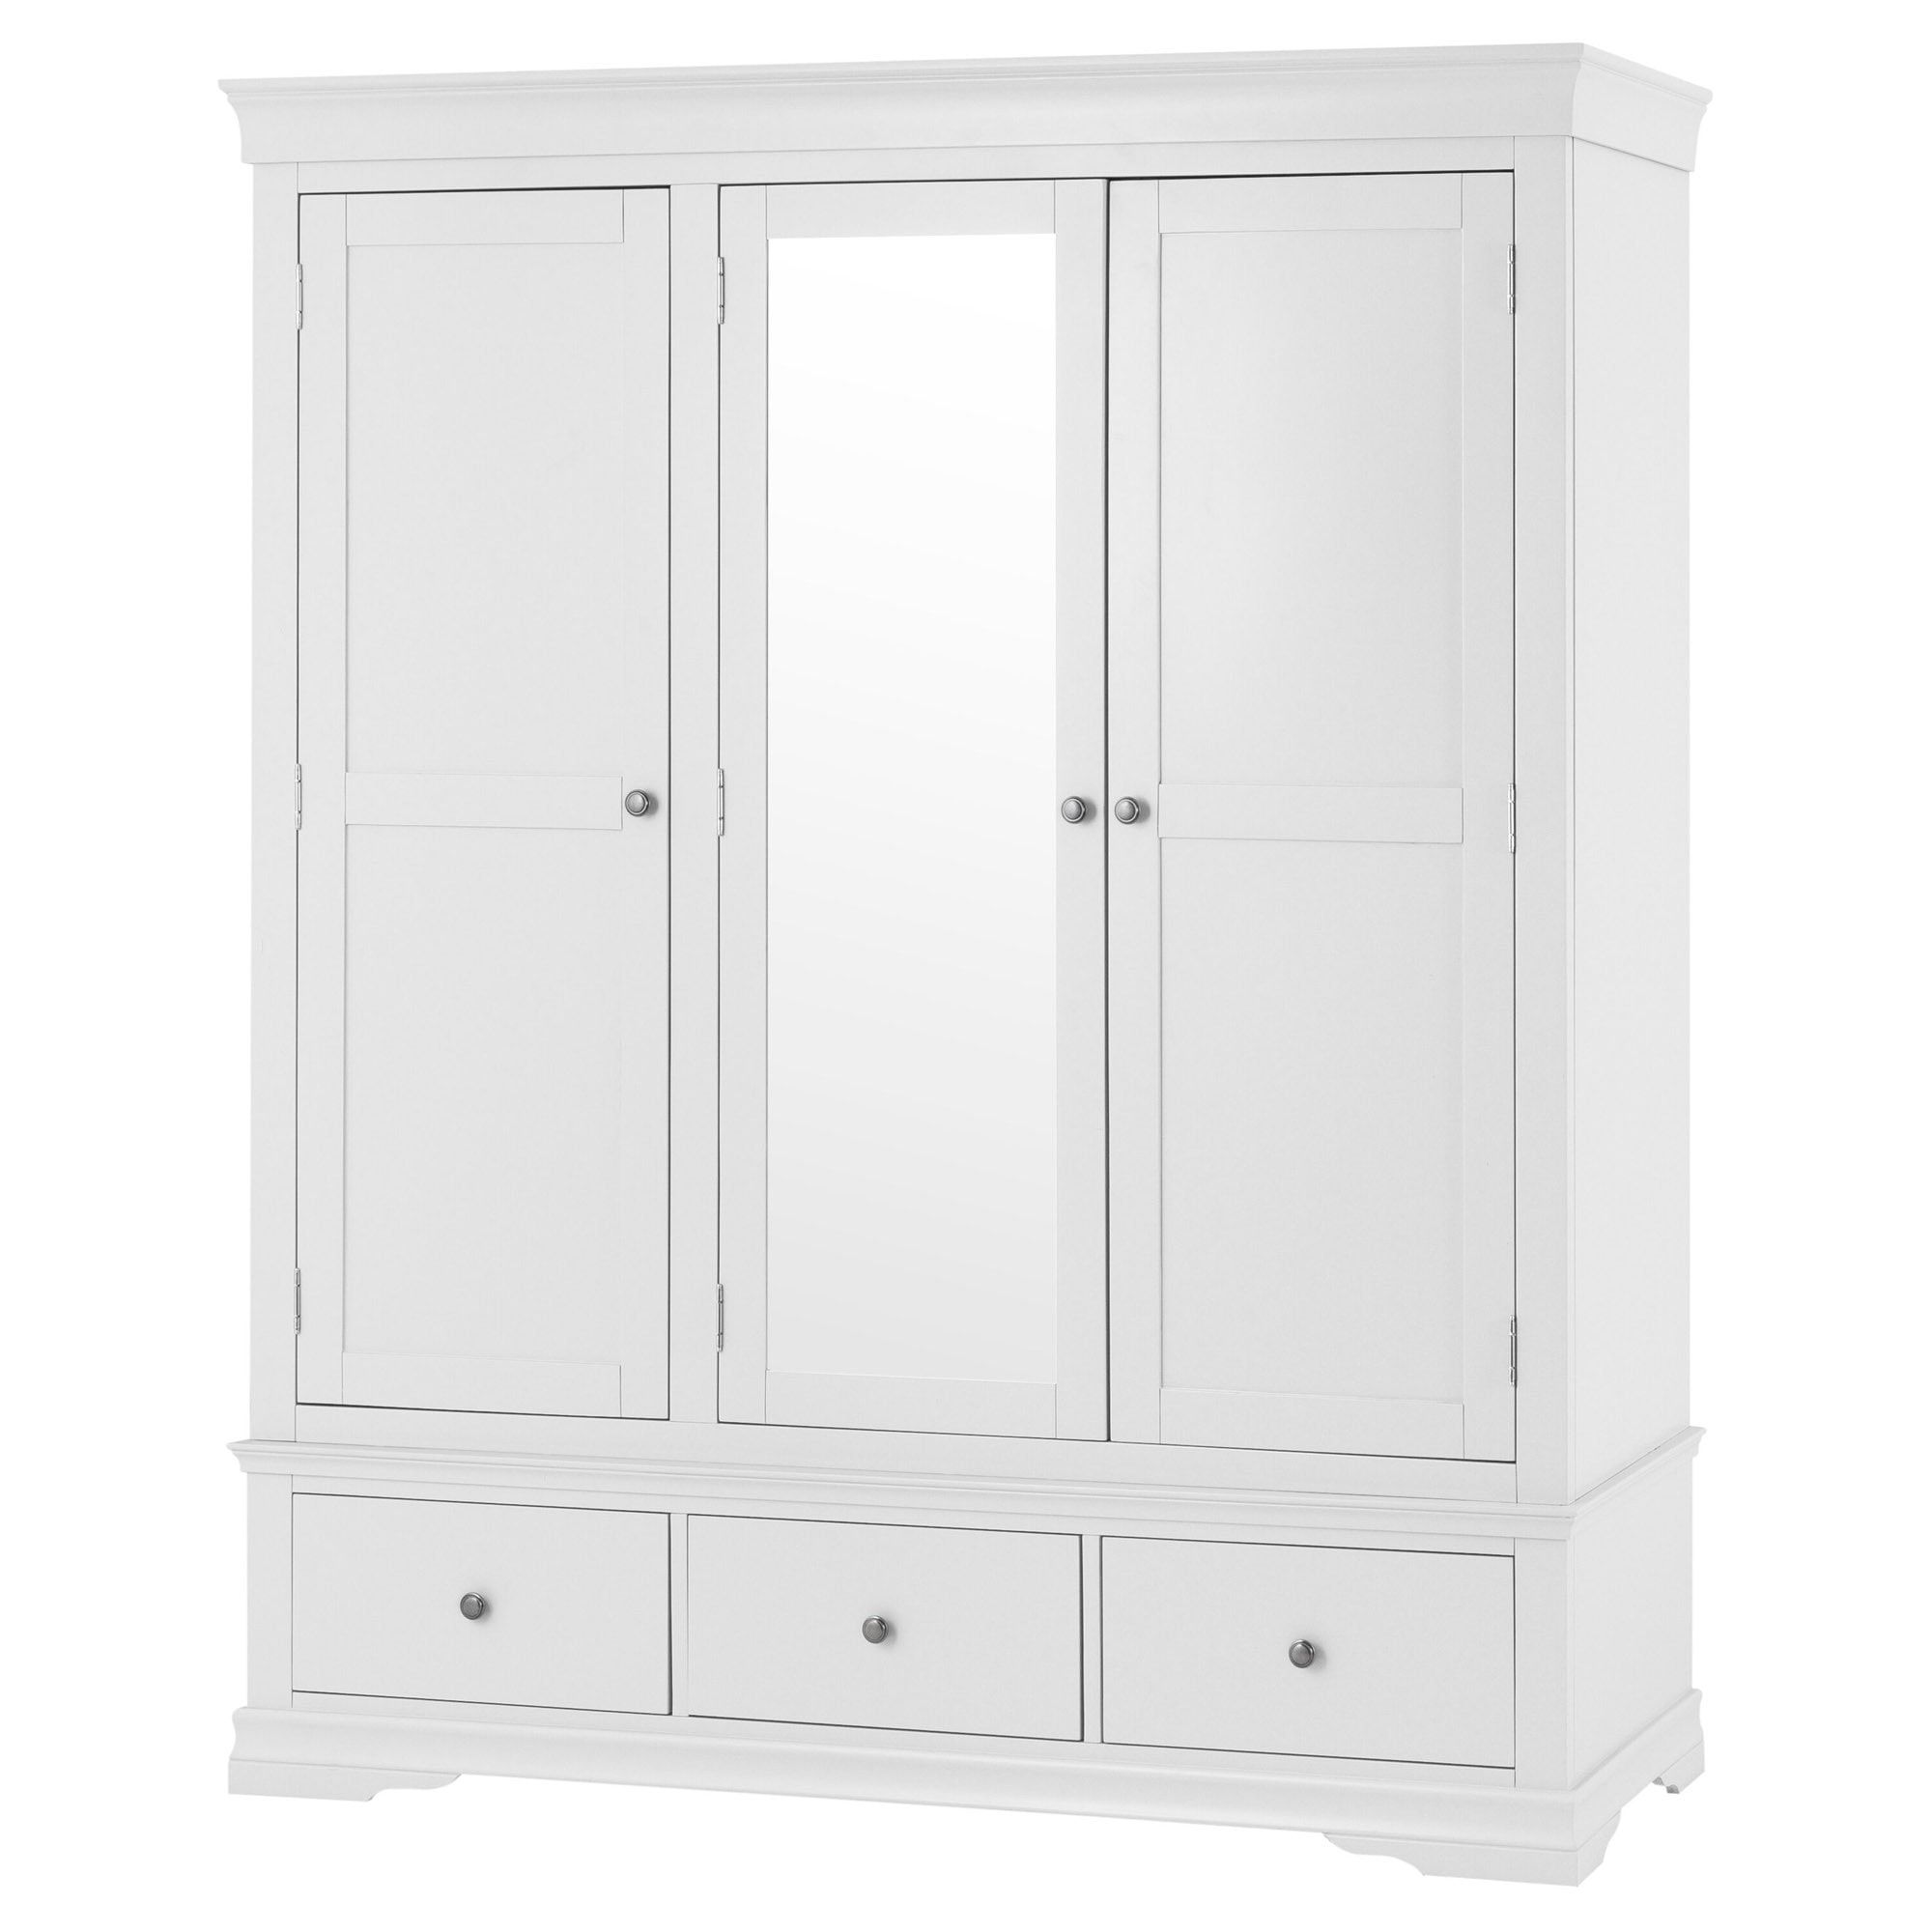 Swindon White 3 Door 3 Drawer Wardrobe | White Wardrobe | White Wooden  Wardrobe With Regard To White Wood Wardrobes With Drawers (View 3 of 20)